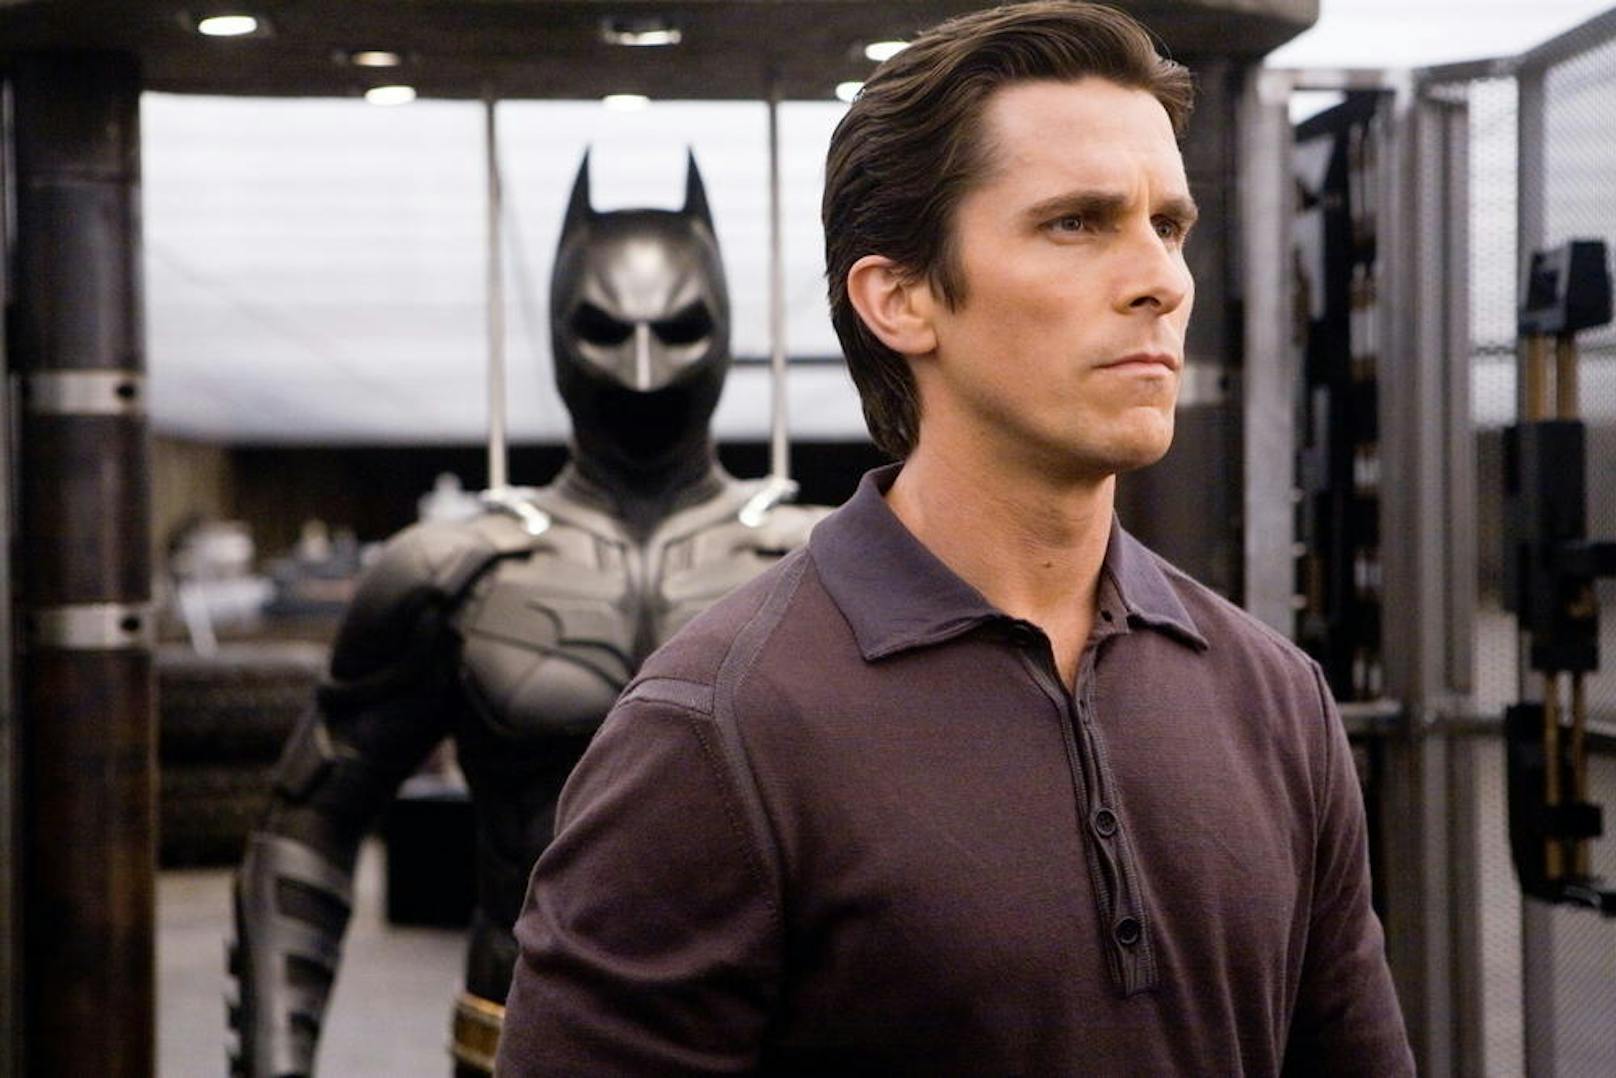 Christian Bale in "The Dark Knight"